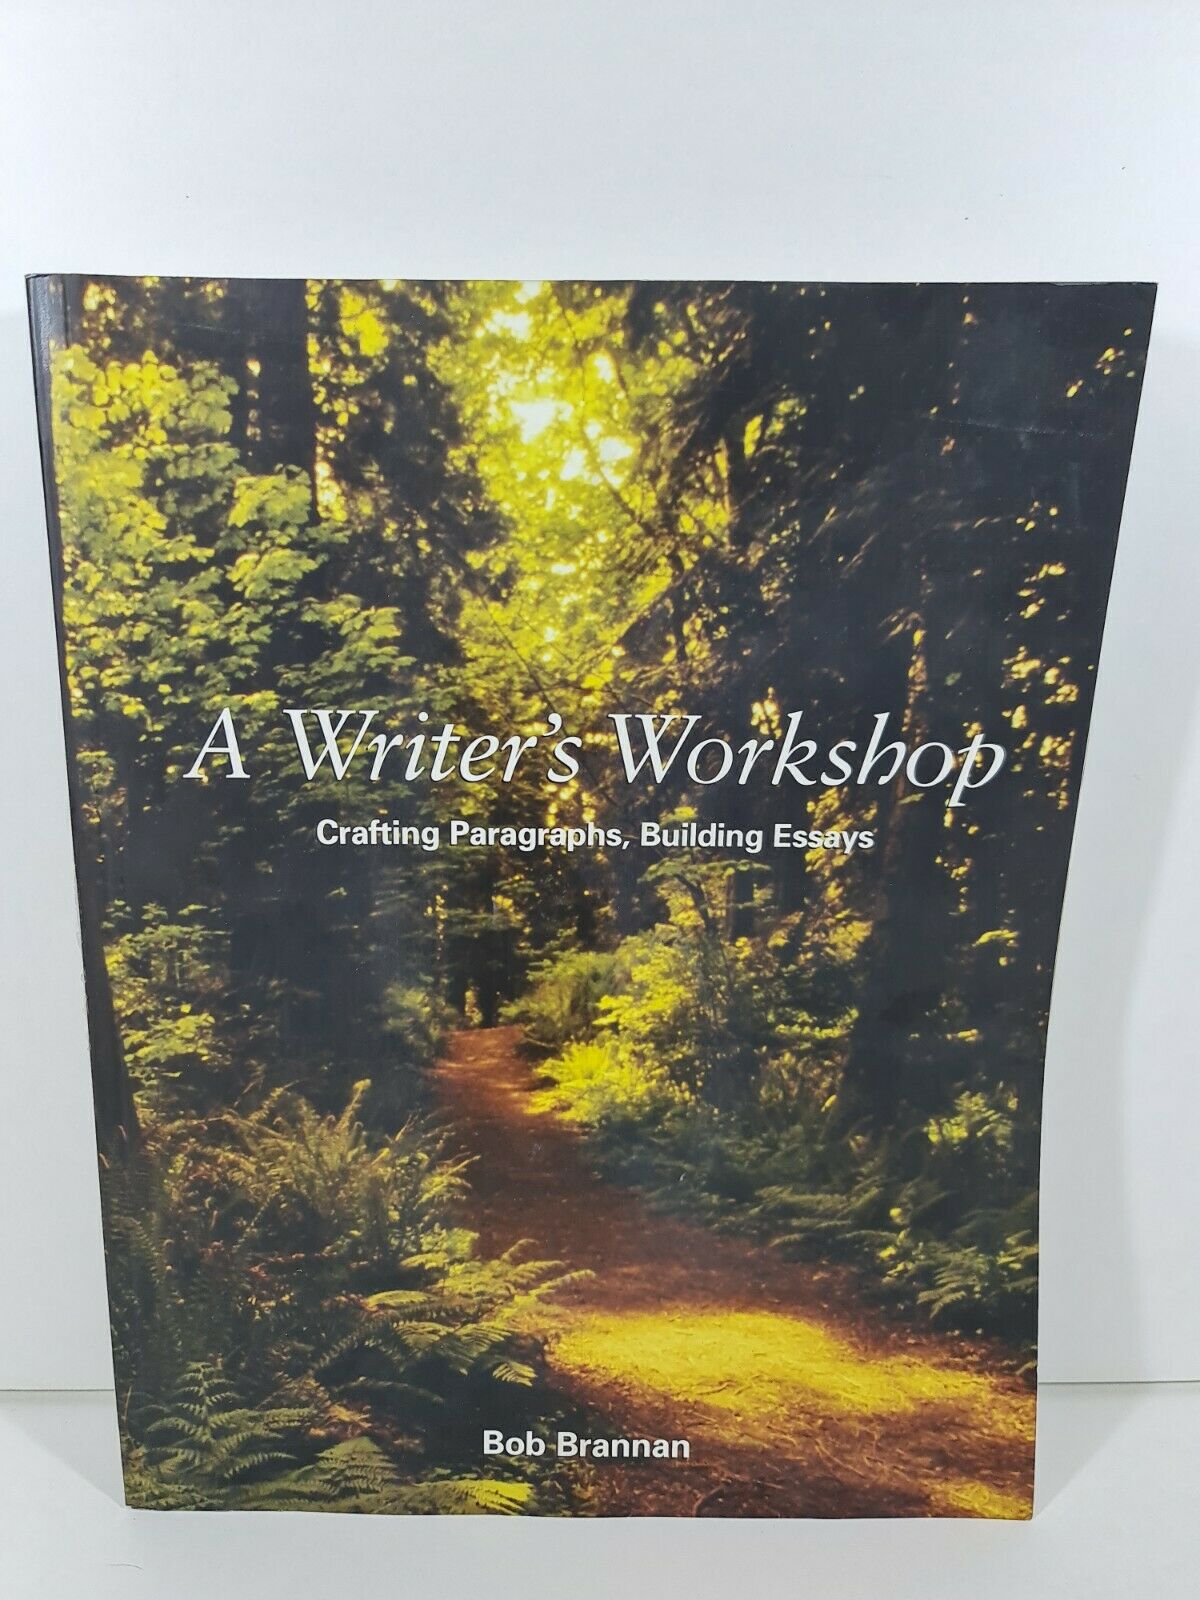 A Writer's Workshop: Crafting Paragraphs, Building Essays by Bob Brannan